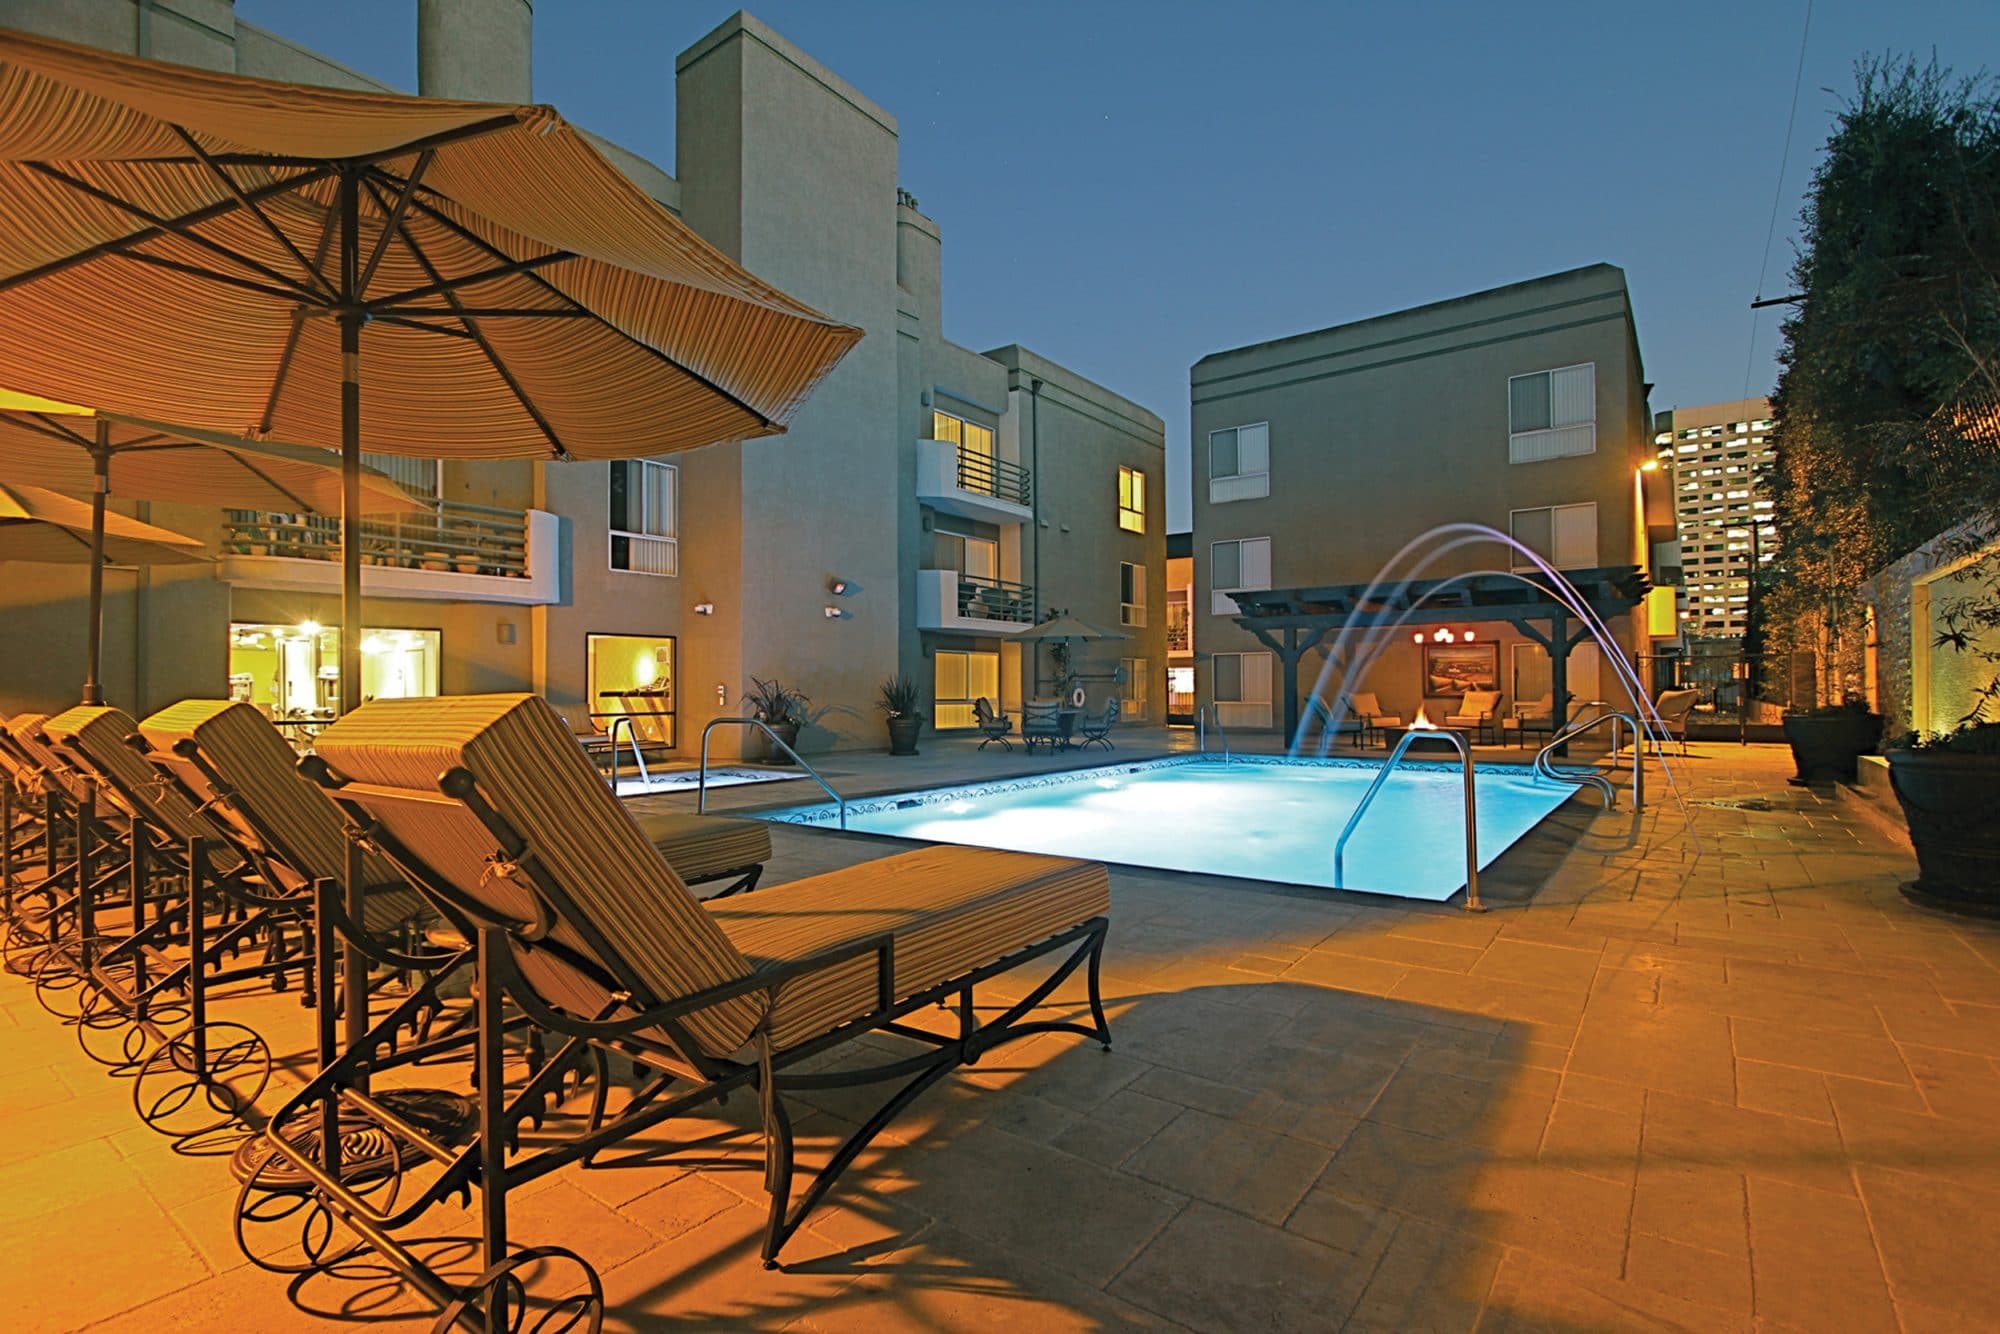 Toluca Terrace Aoartments for Rent in CA